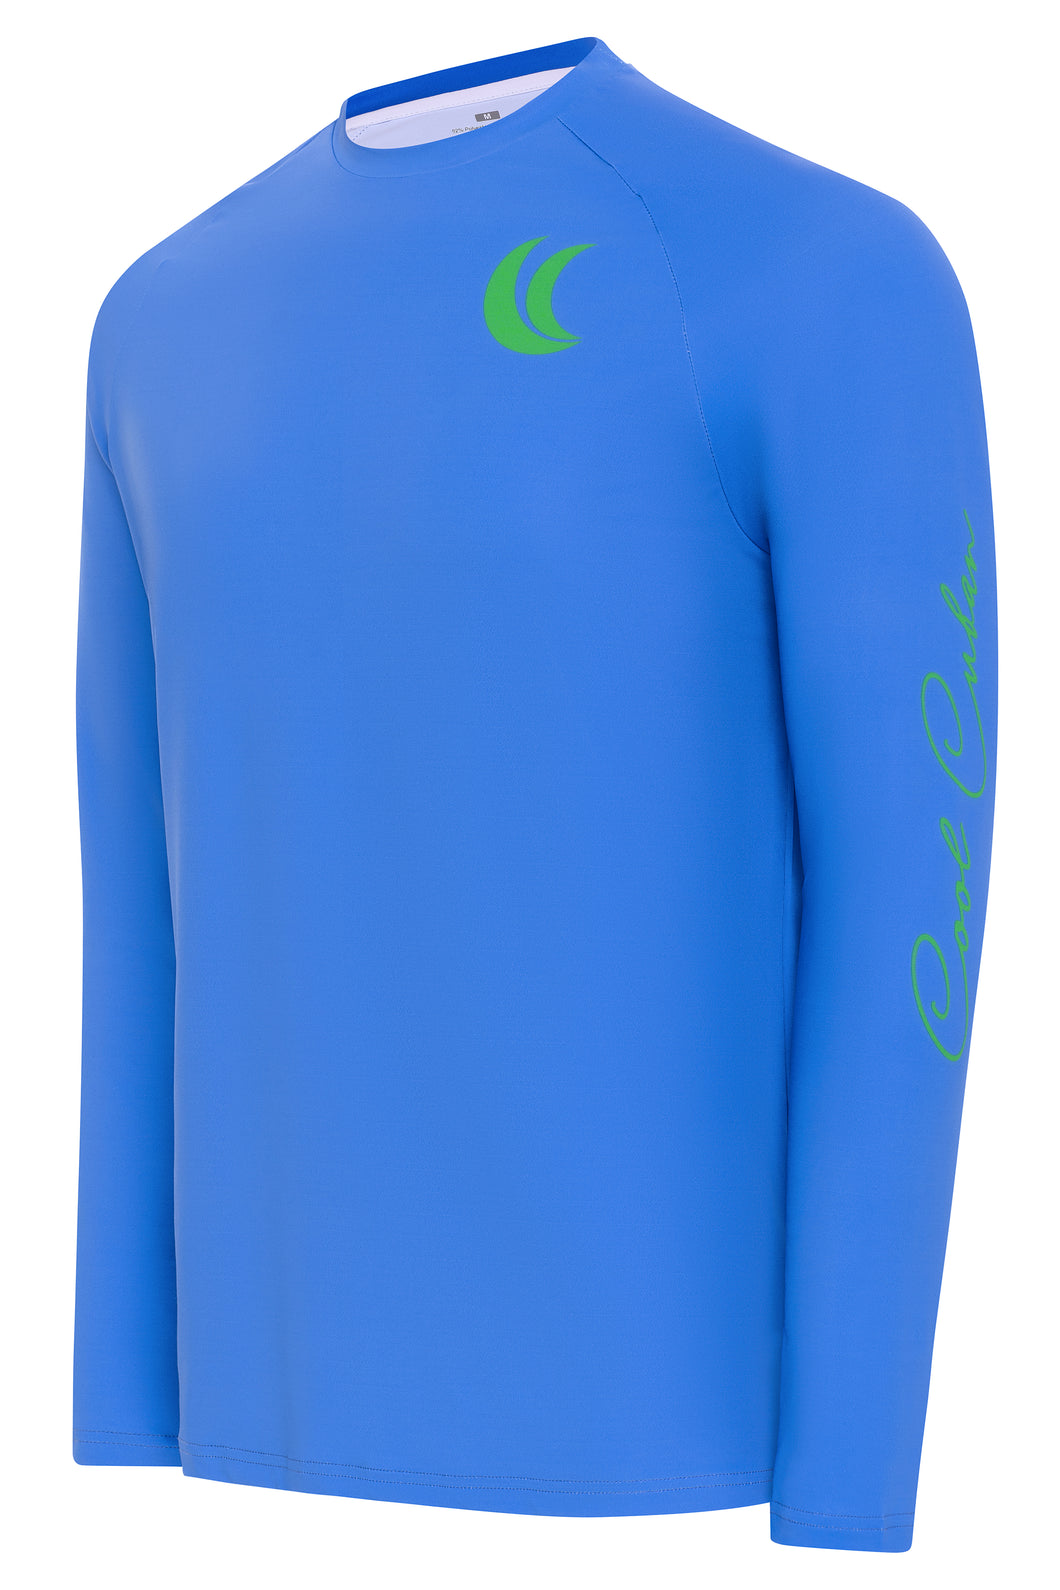 Fishing shirt Solid blue with green logo crew neck High performance long sleeve Shirt